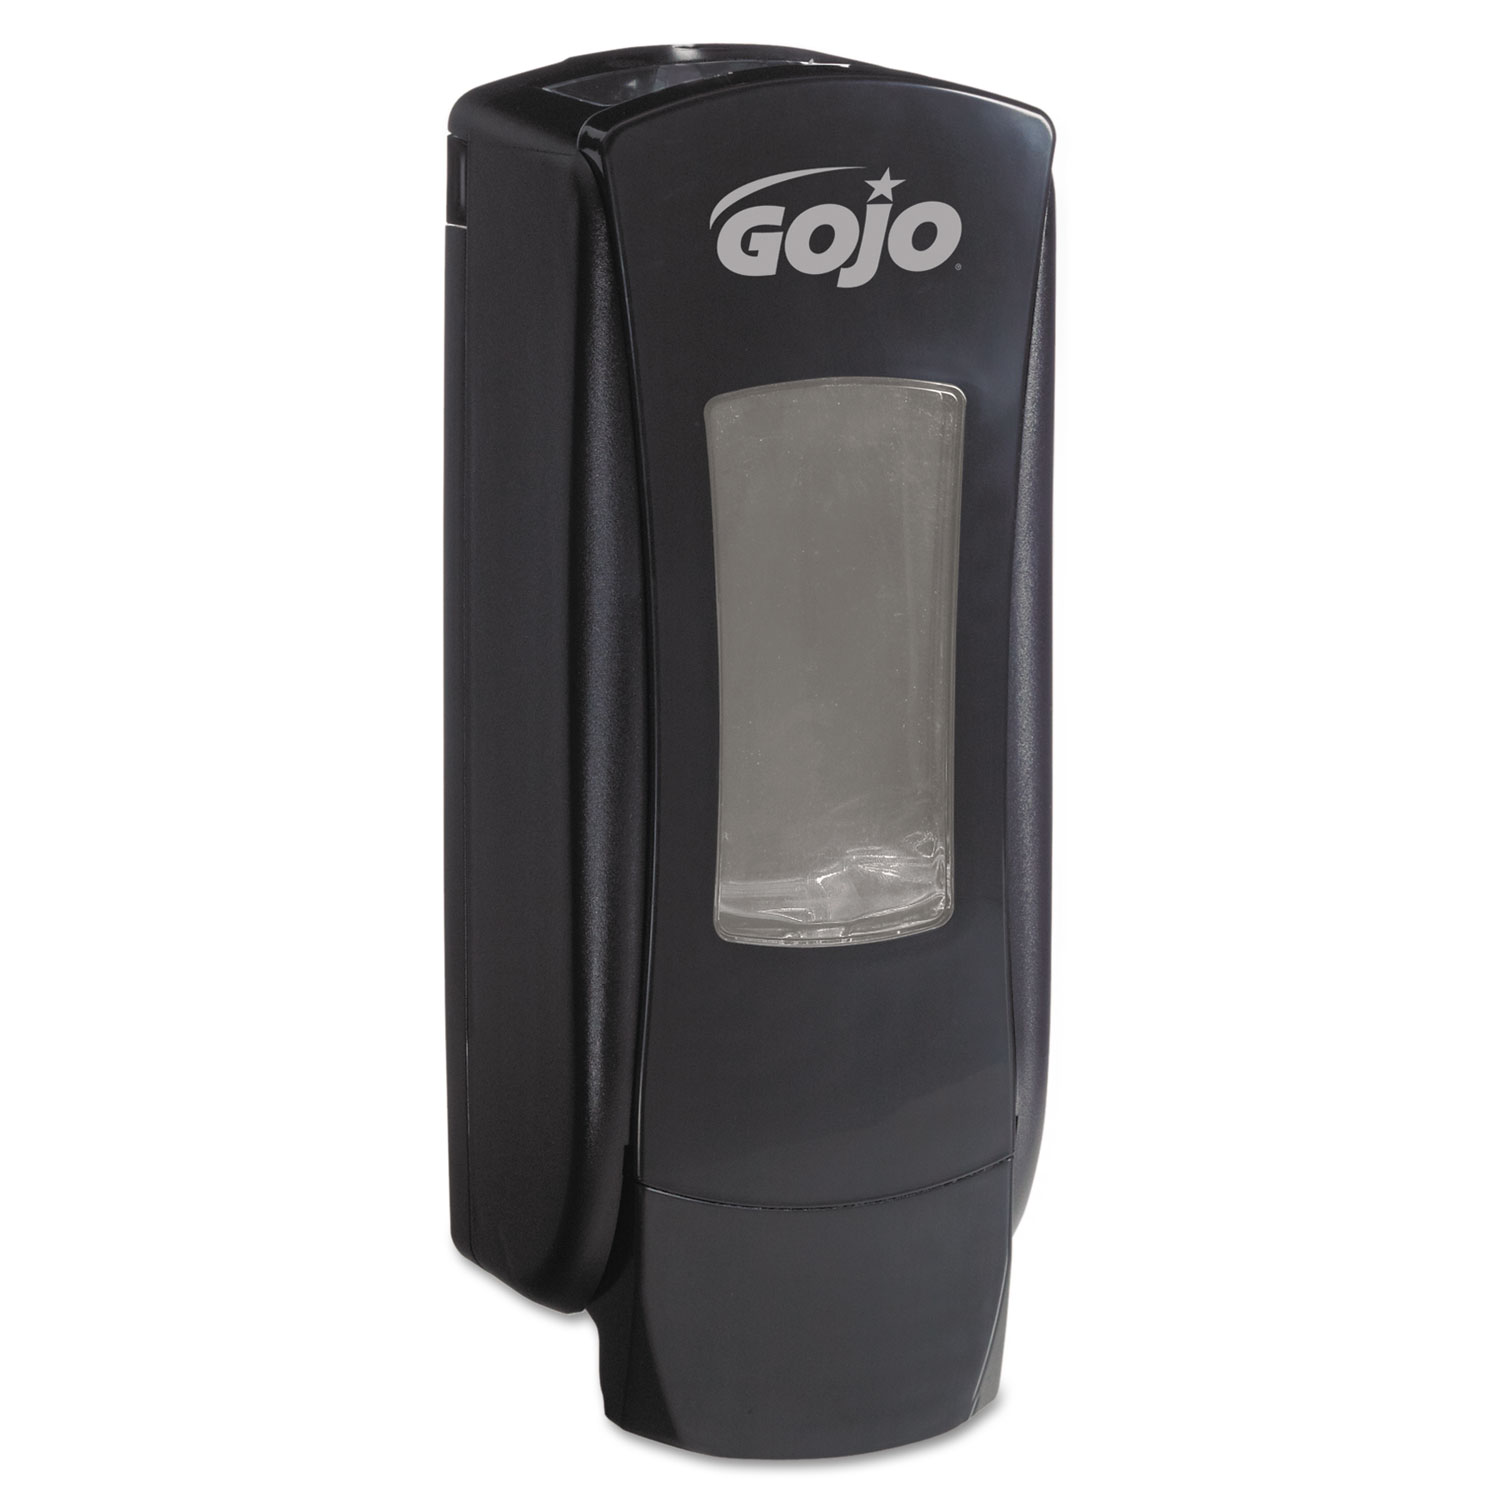  GOJO 8886-06 ADX-12 Dispenser, 1250 mL, 4.5 x 4 x 11.75, Black (GOJ888606) 